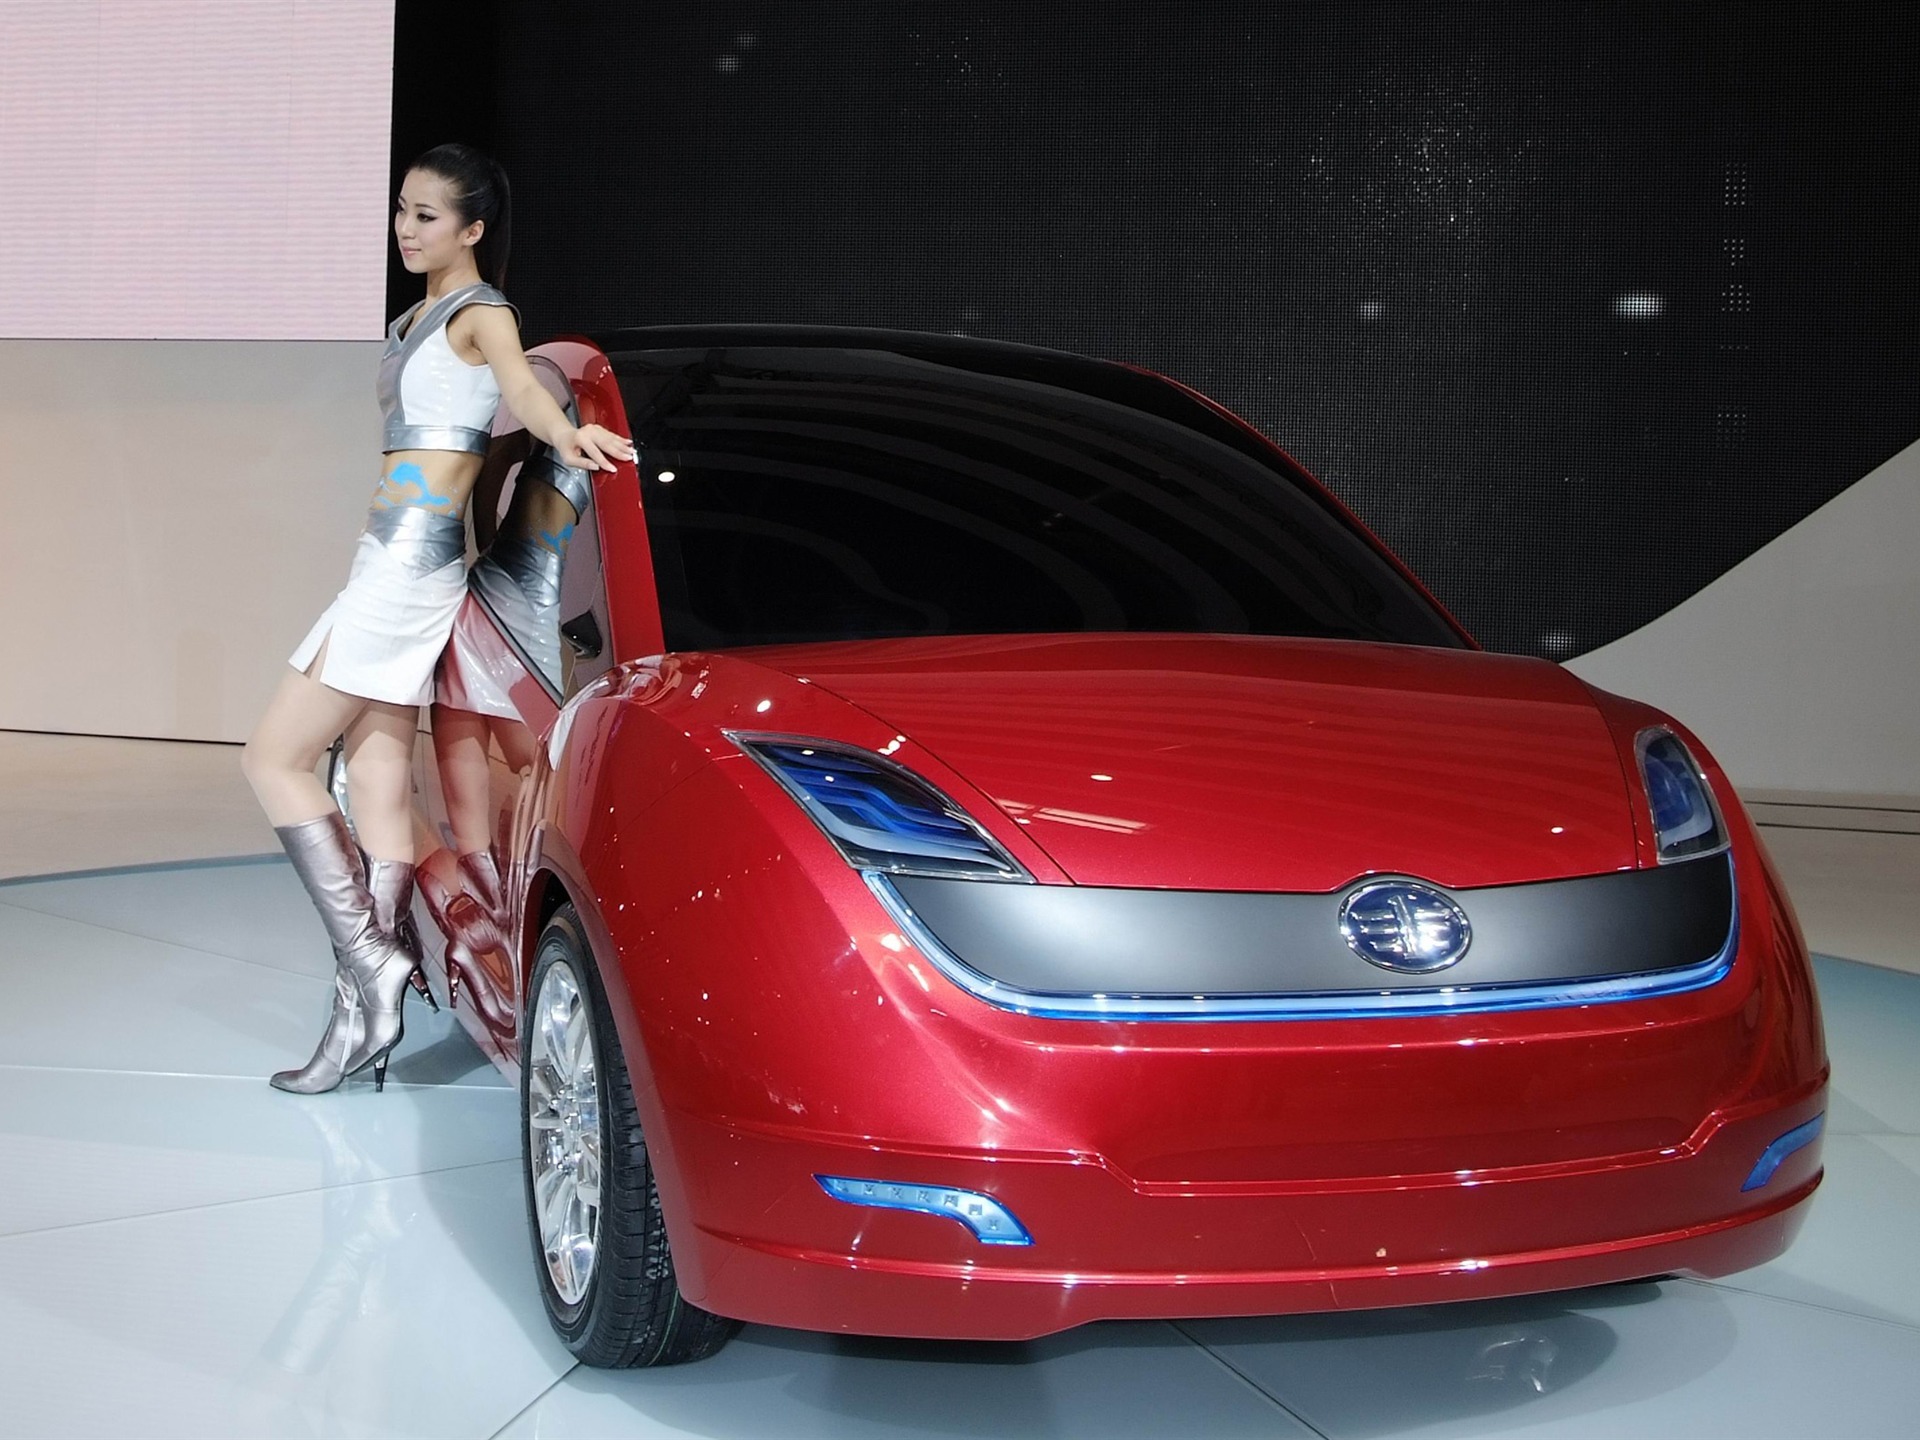 2010 Salón Internacional del Automóvil de Beijing Heung Che belleza (obras barras de refuerzo) #24 - 1920x1440